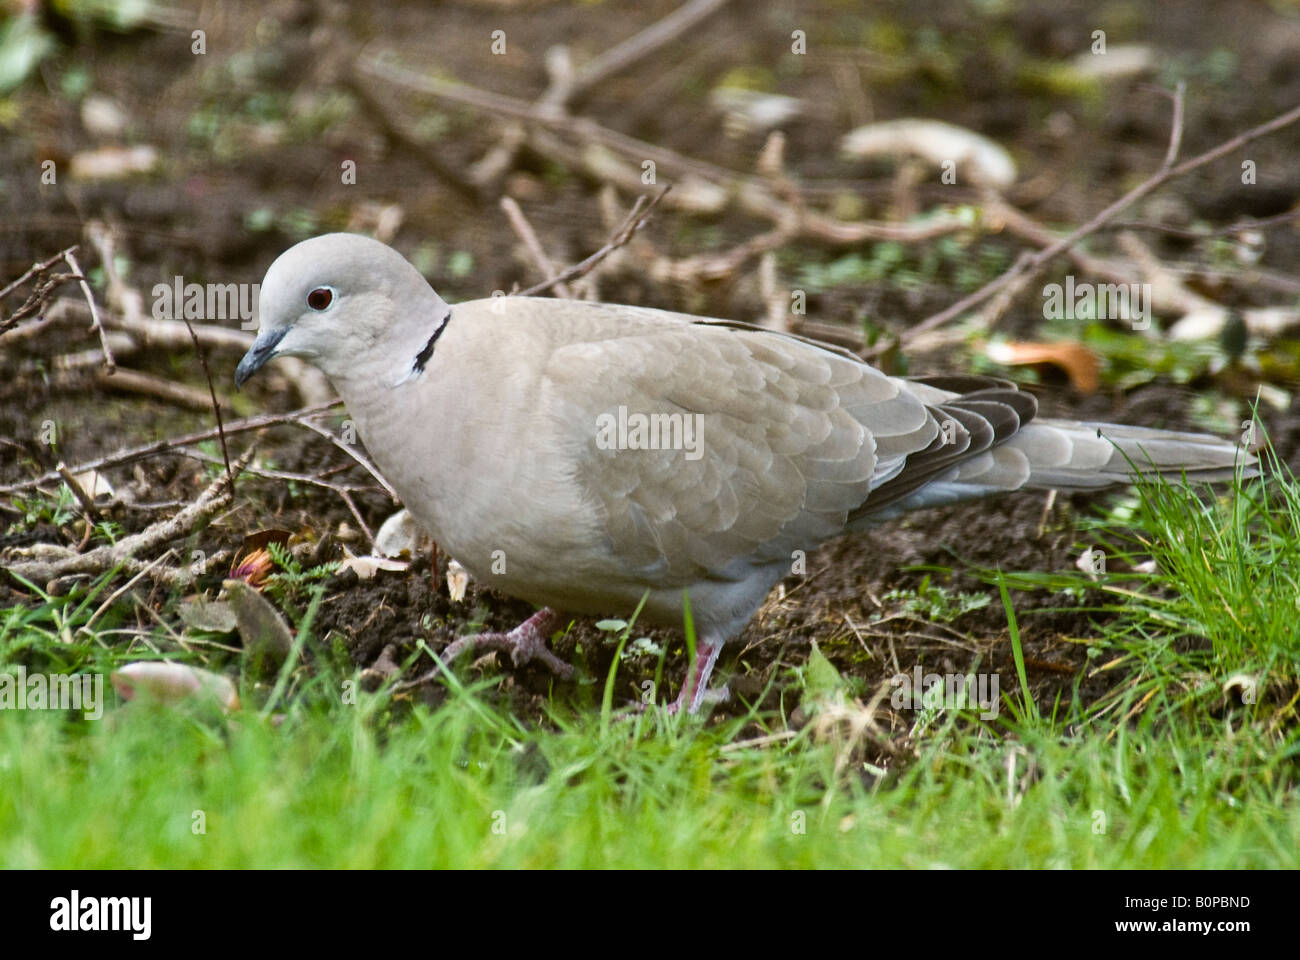 A collared dove seen in a British garden. Latin name Streptopelia decaocto. Stock Photo